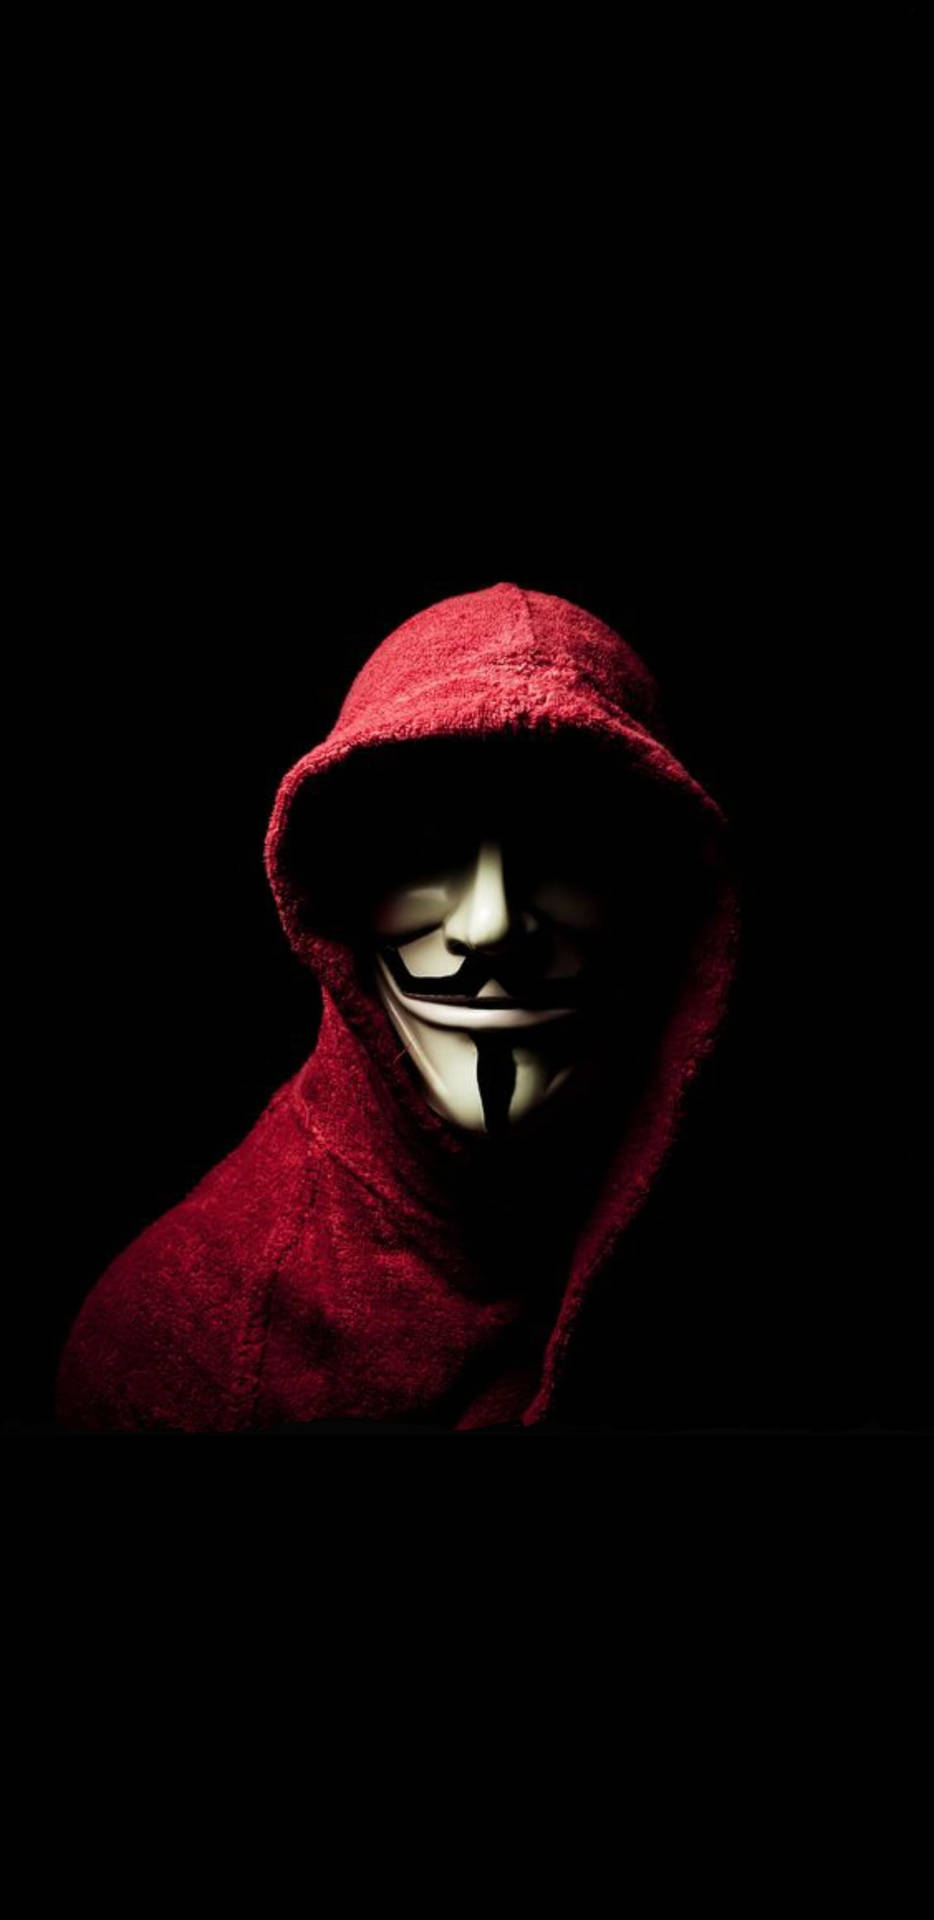 Hacker Mask In The Dark